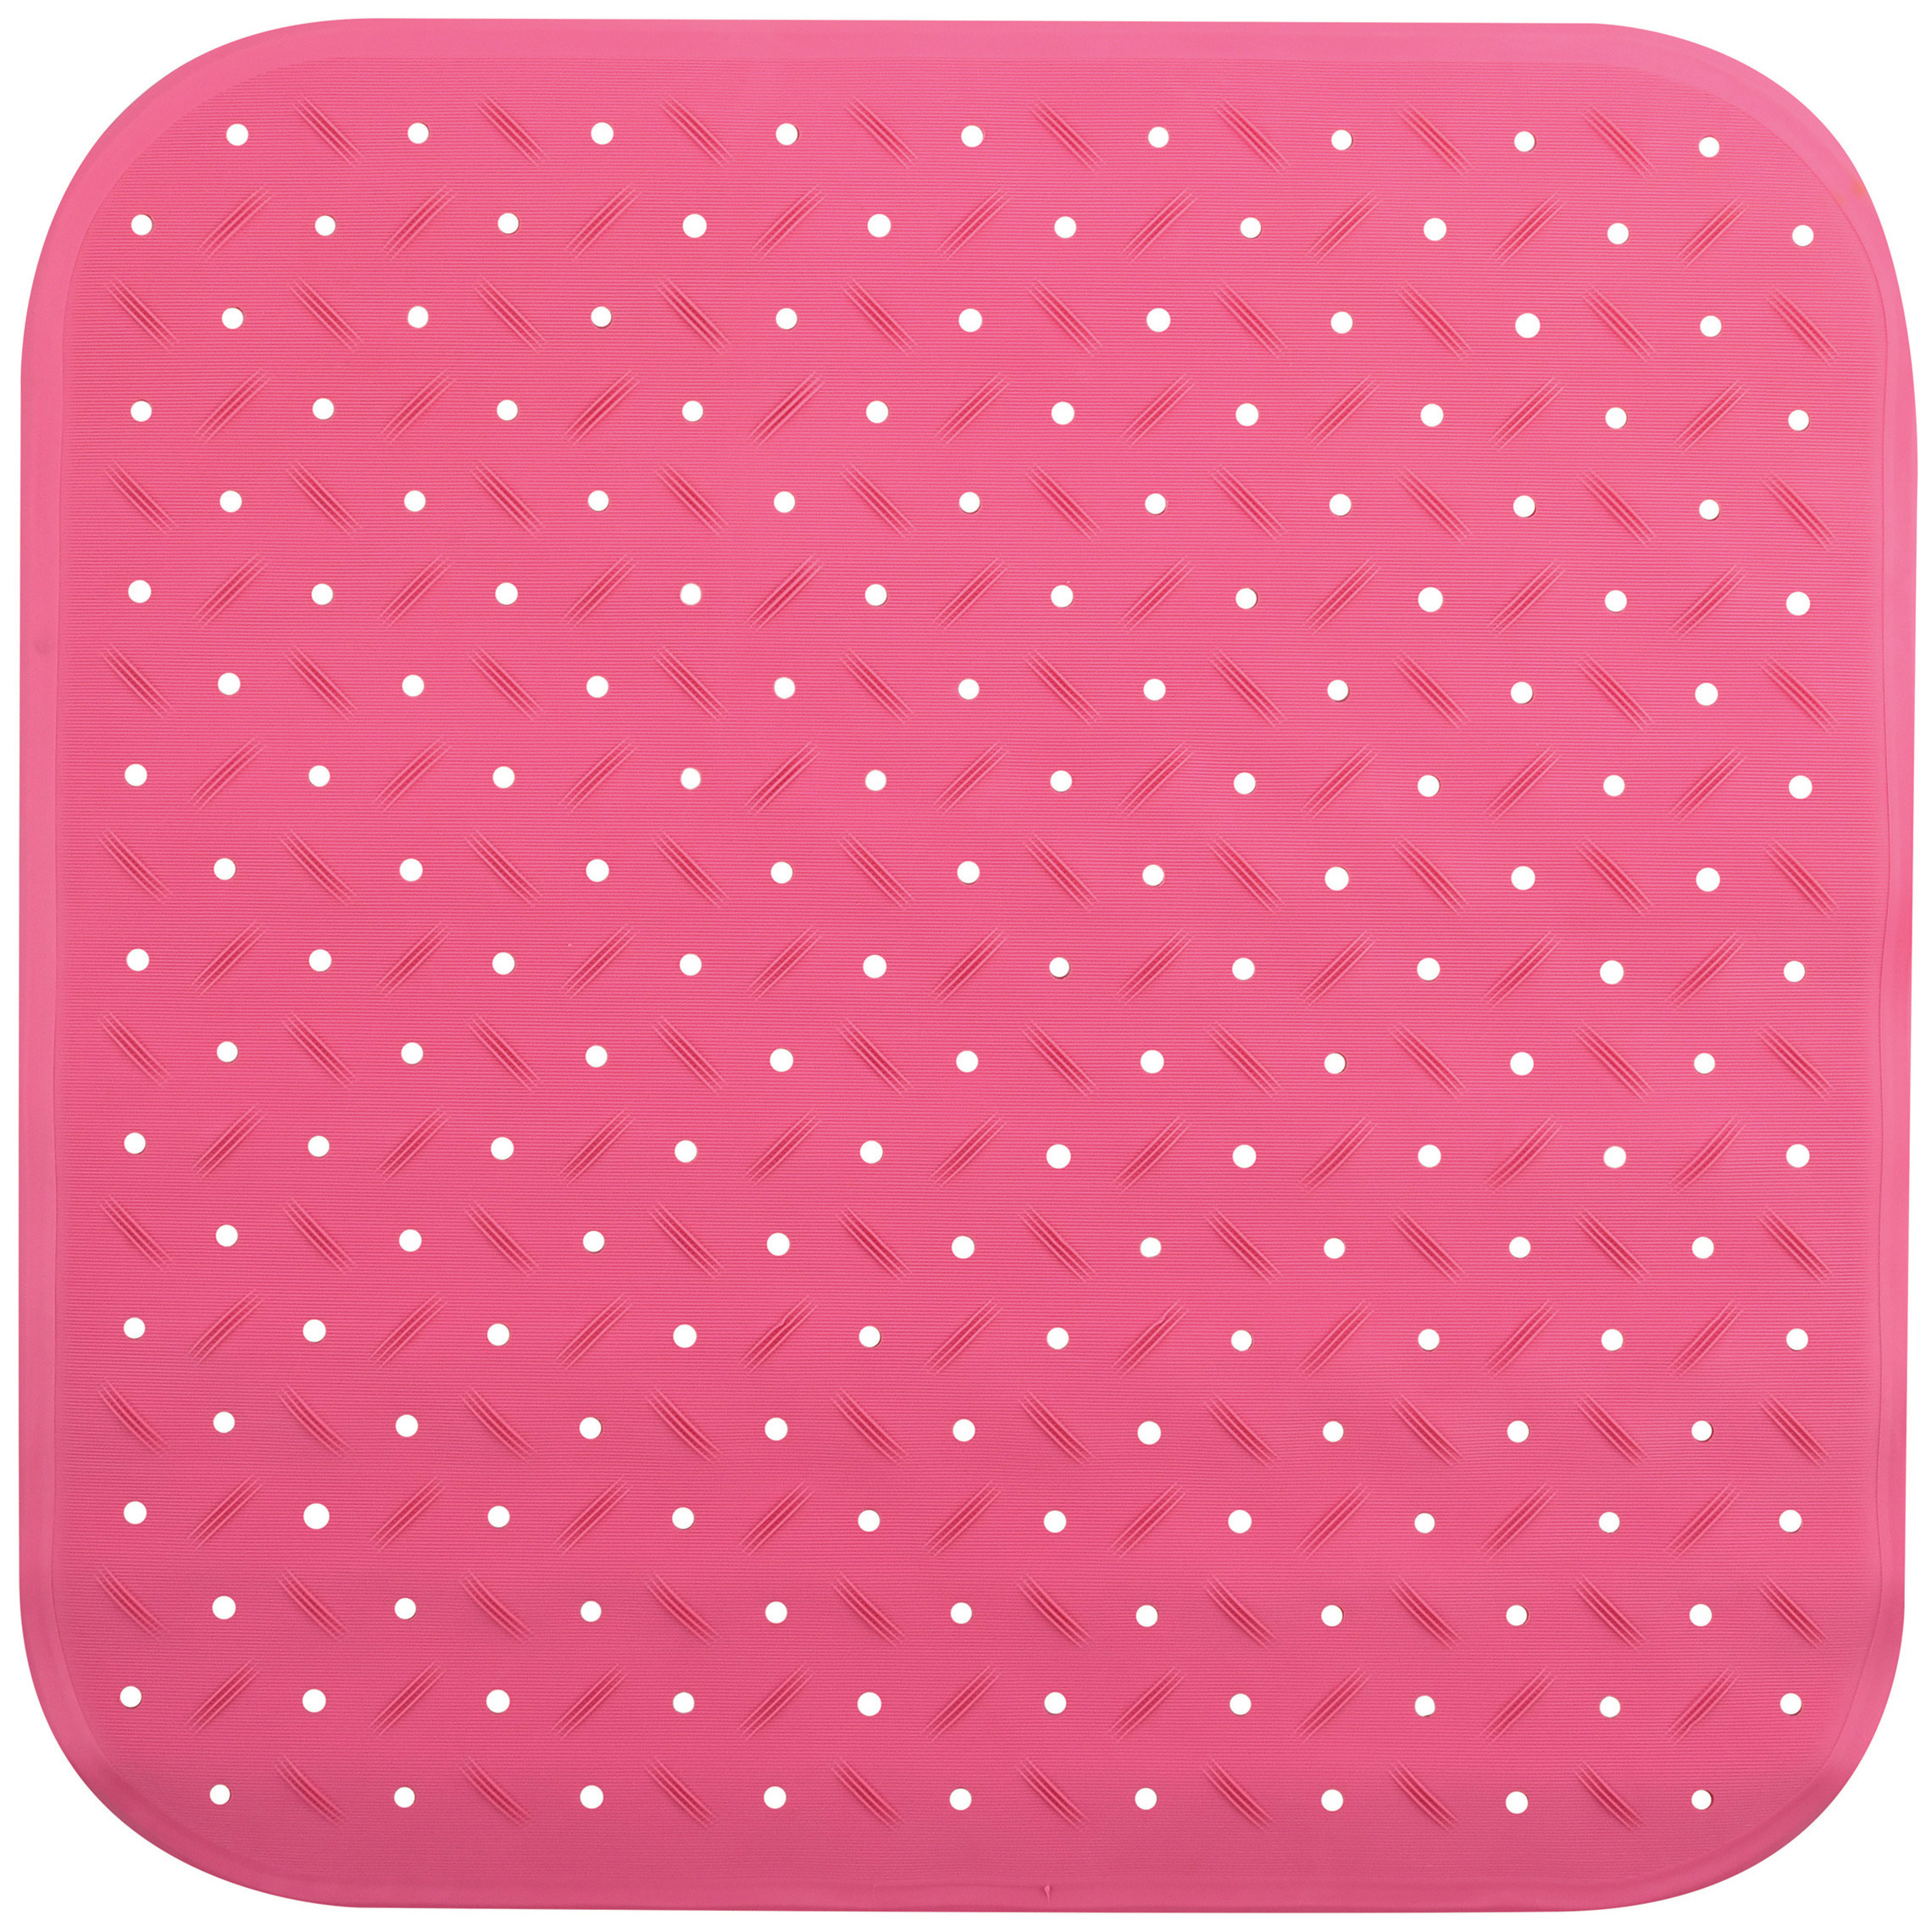 Douche-bad anti-slip mat badkamer rubber fuchsia roze 54 x 54 cm vierkant